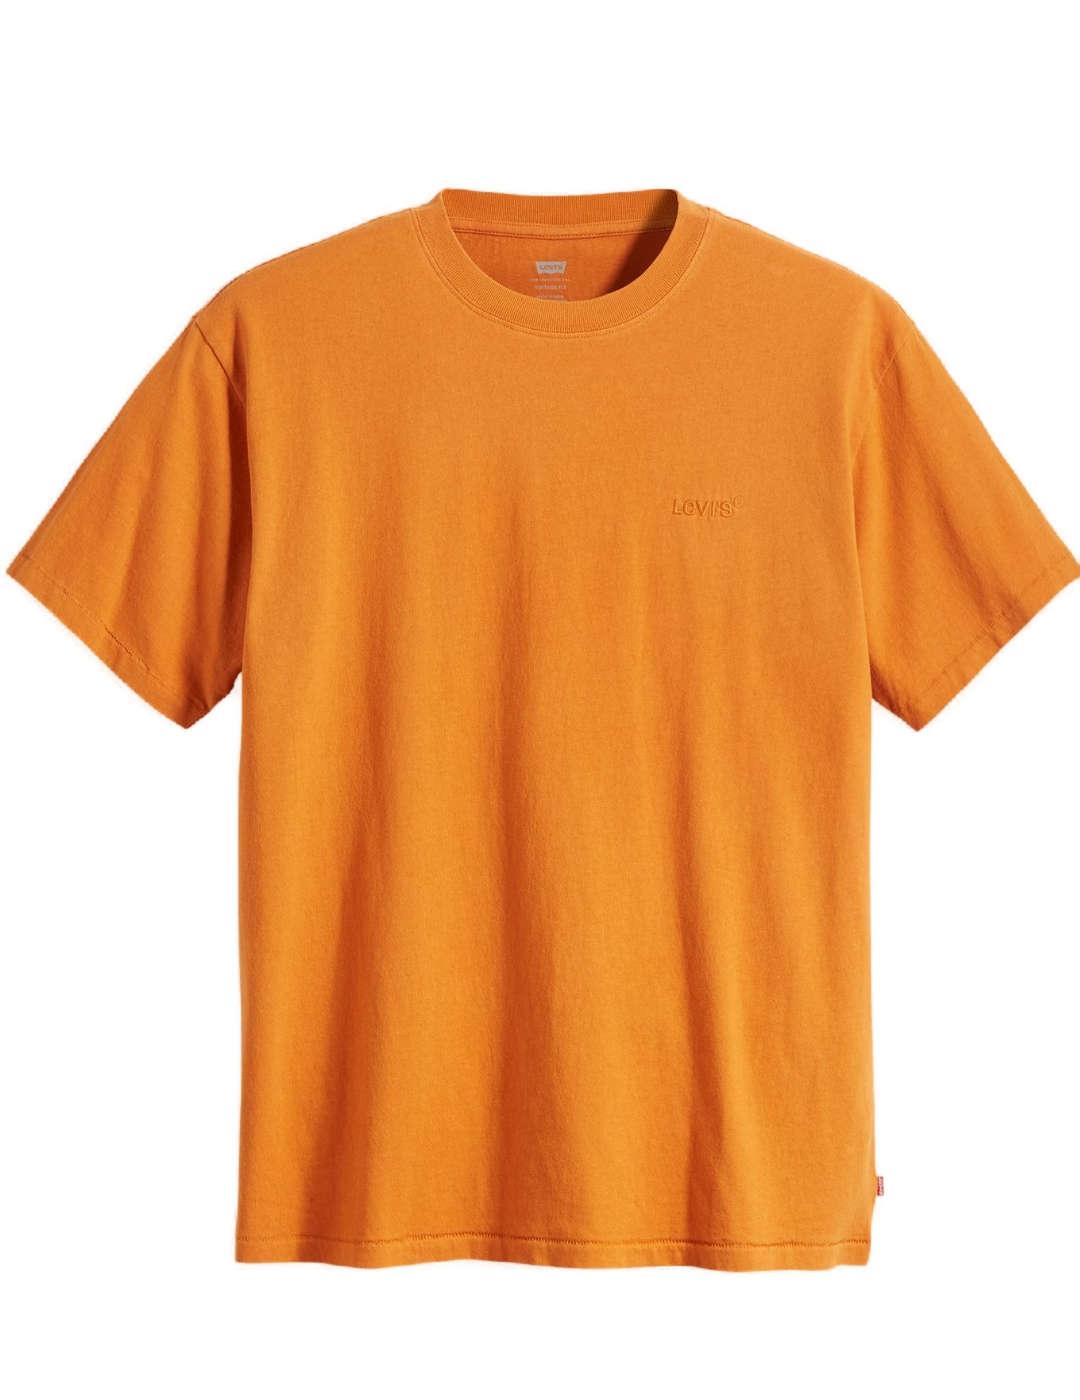 Camiseta Levis naranja teja manga corta para hombre